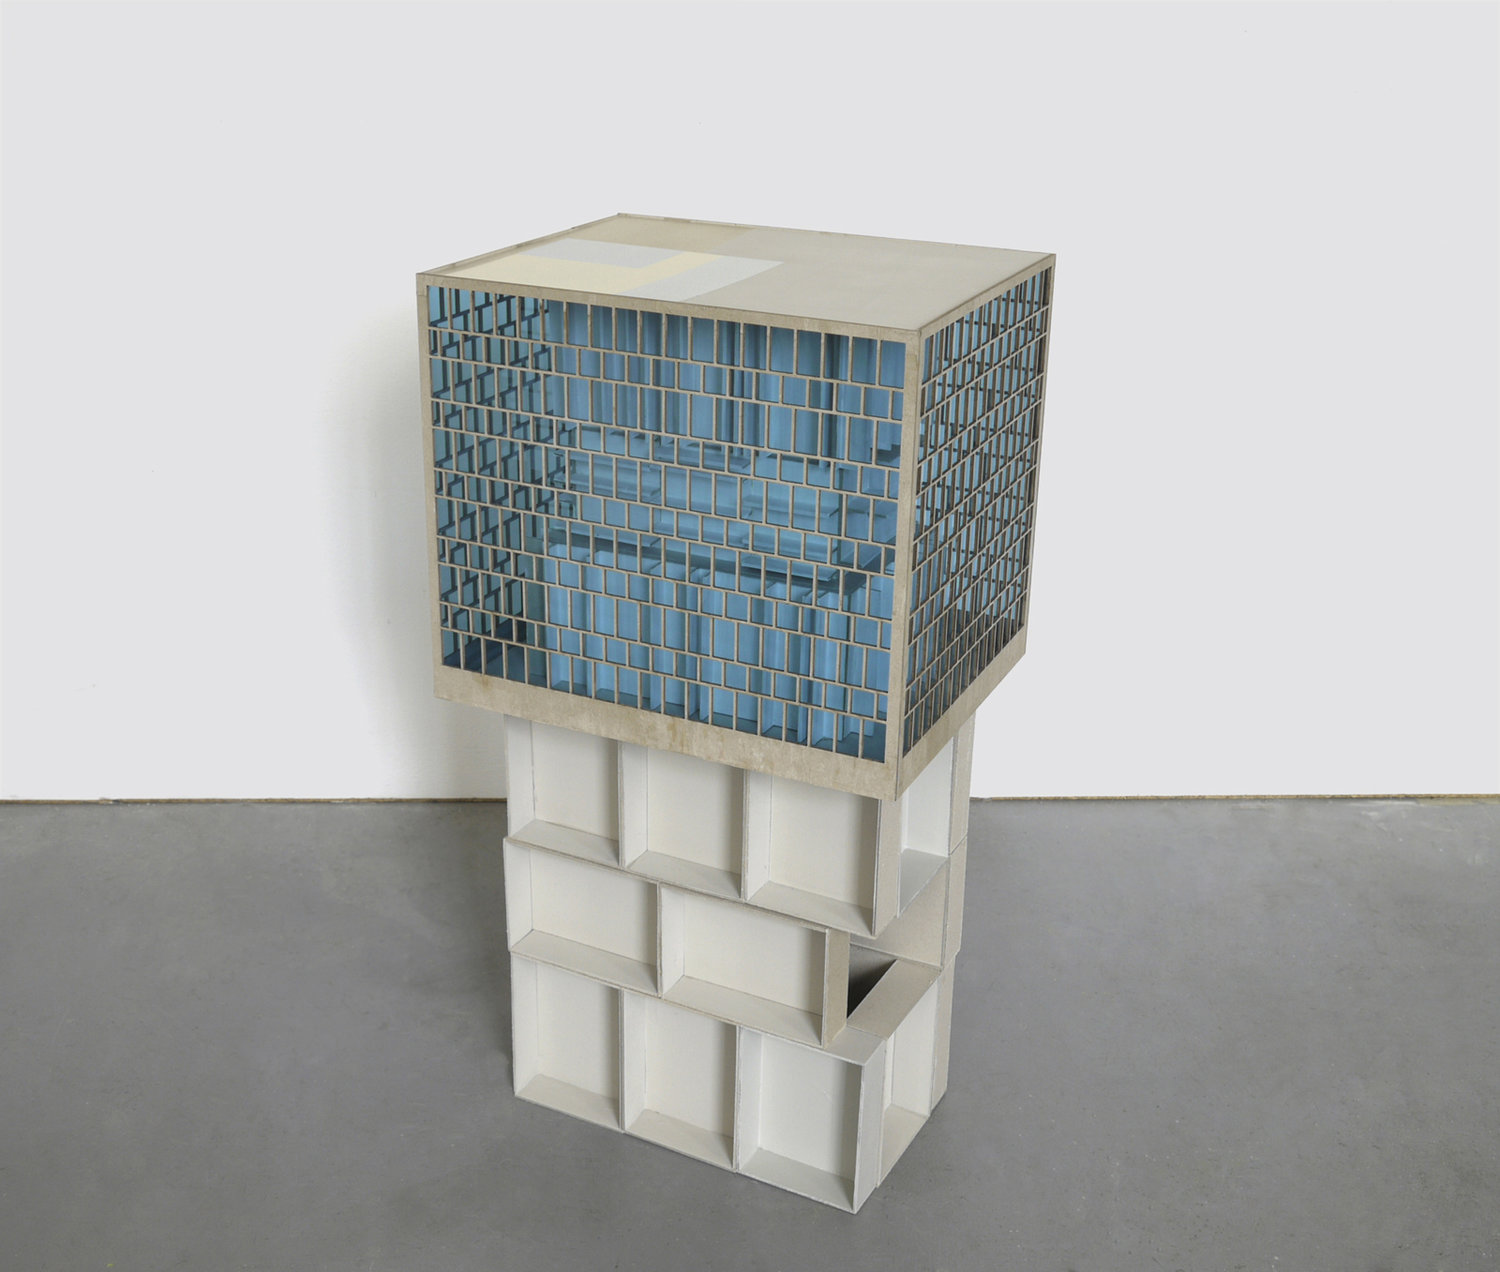  Räume unter sich, 2015, cardboard, acrylic glass, 90 x 46 x 37 cm 